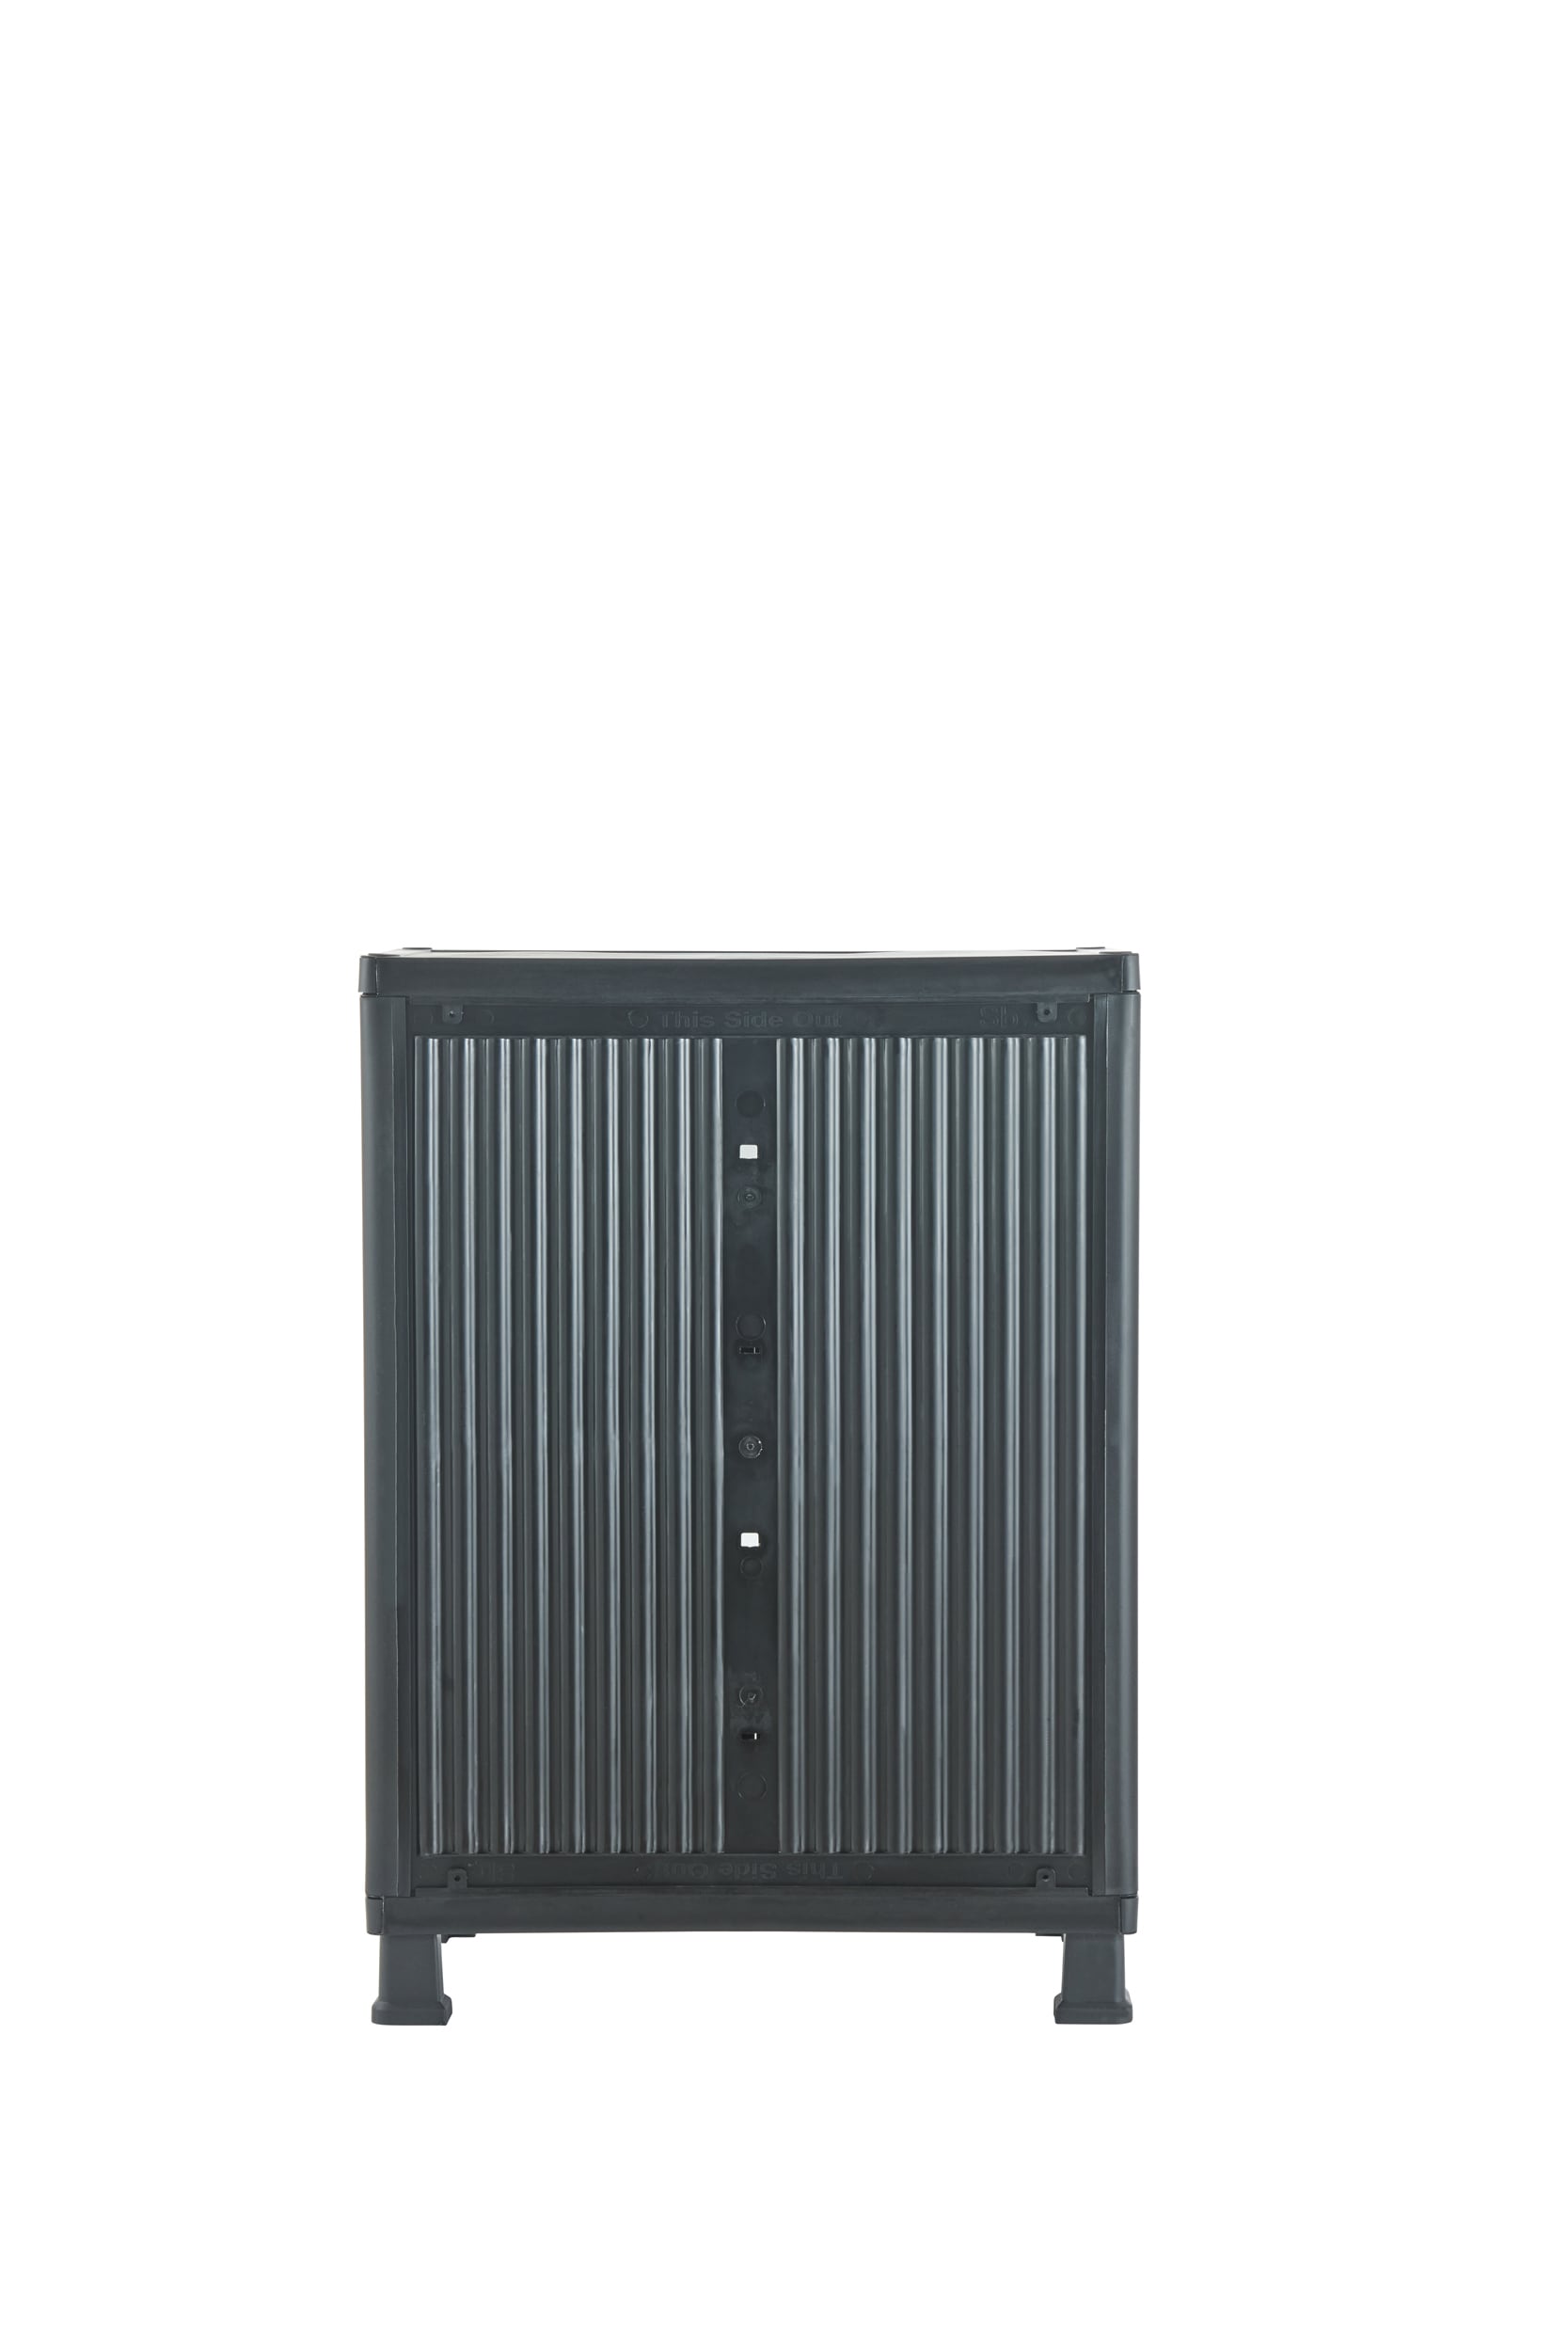 BLACK & DECKER Plastic Garage Cabinet (34.5-in W x 36.25-in H x